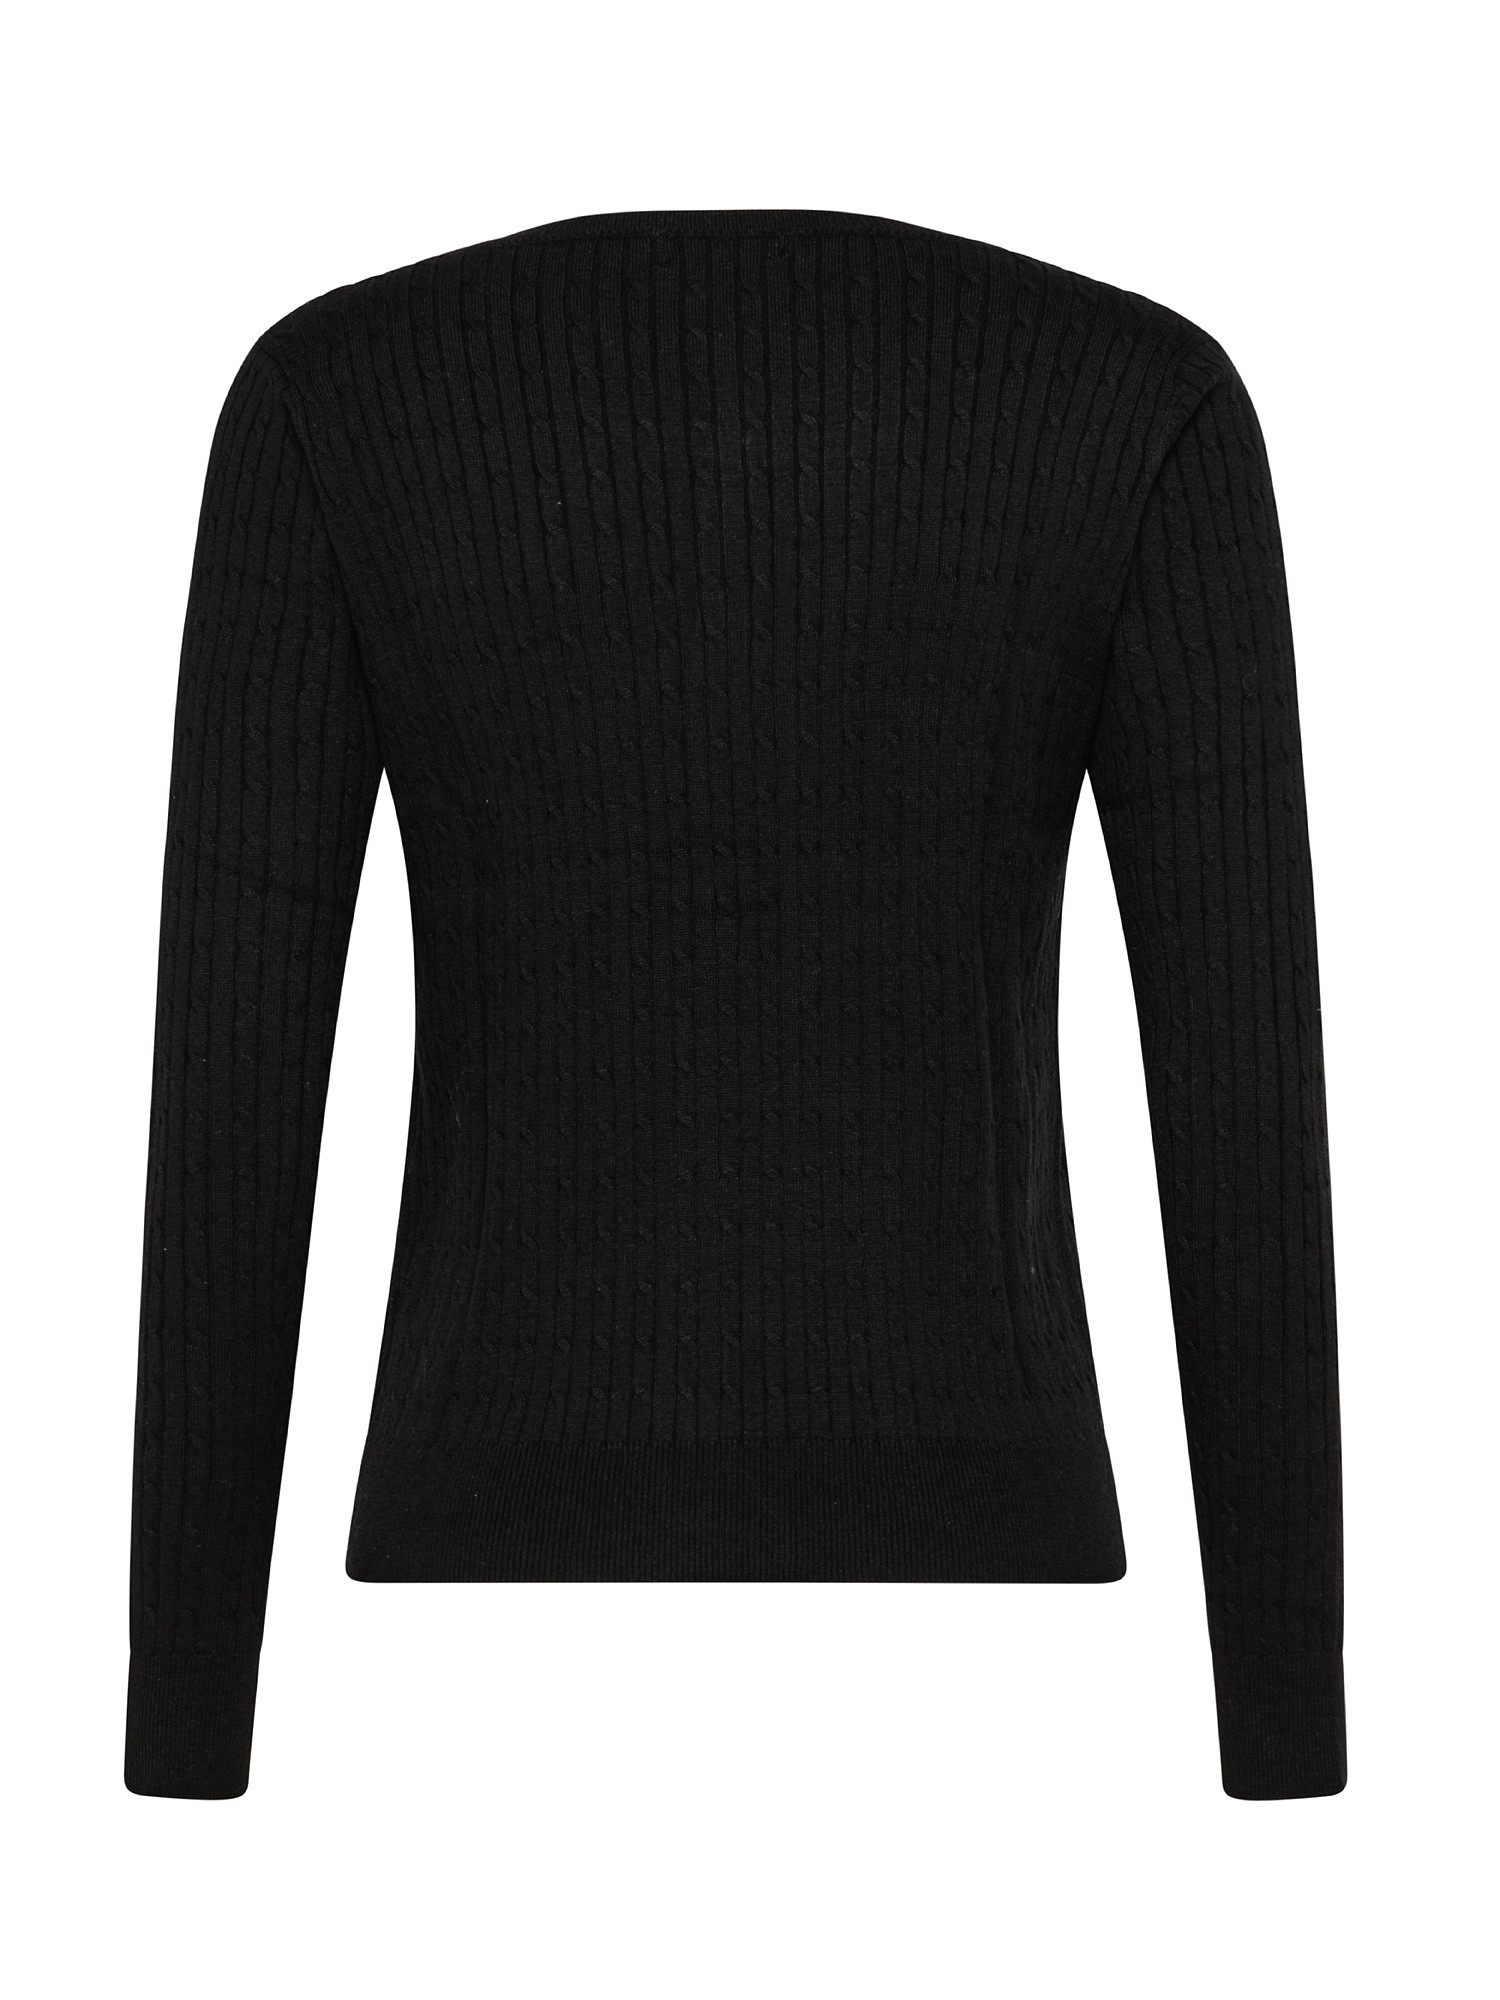 Knitted crewneck cardigan, Black, large image number 1